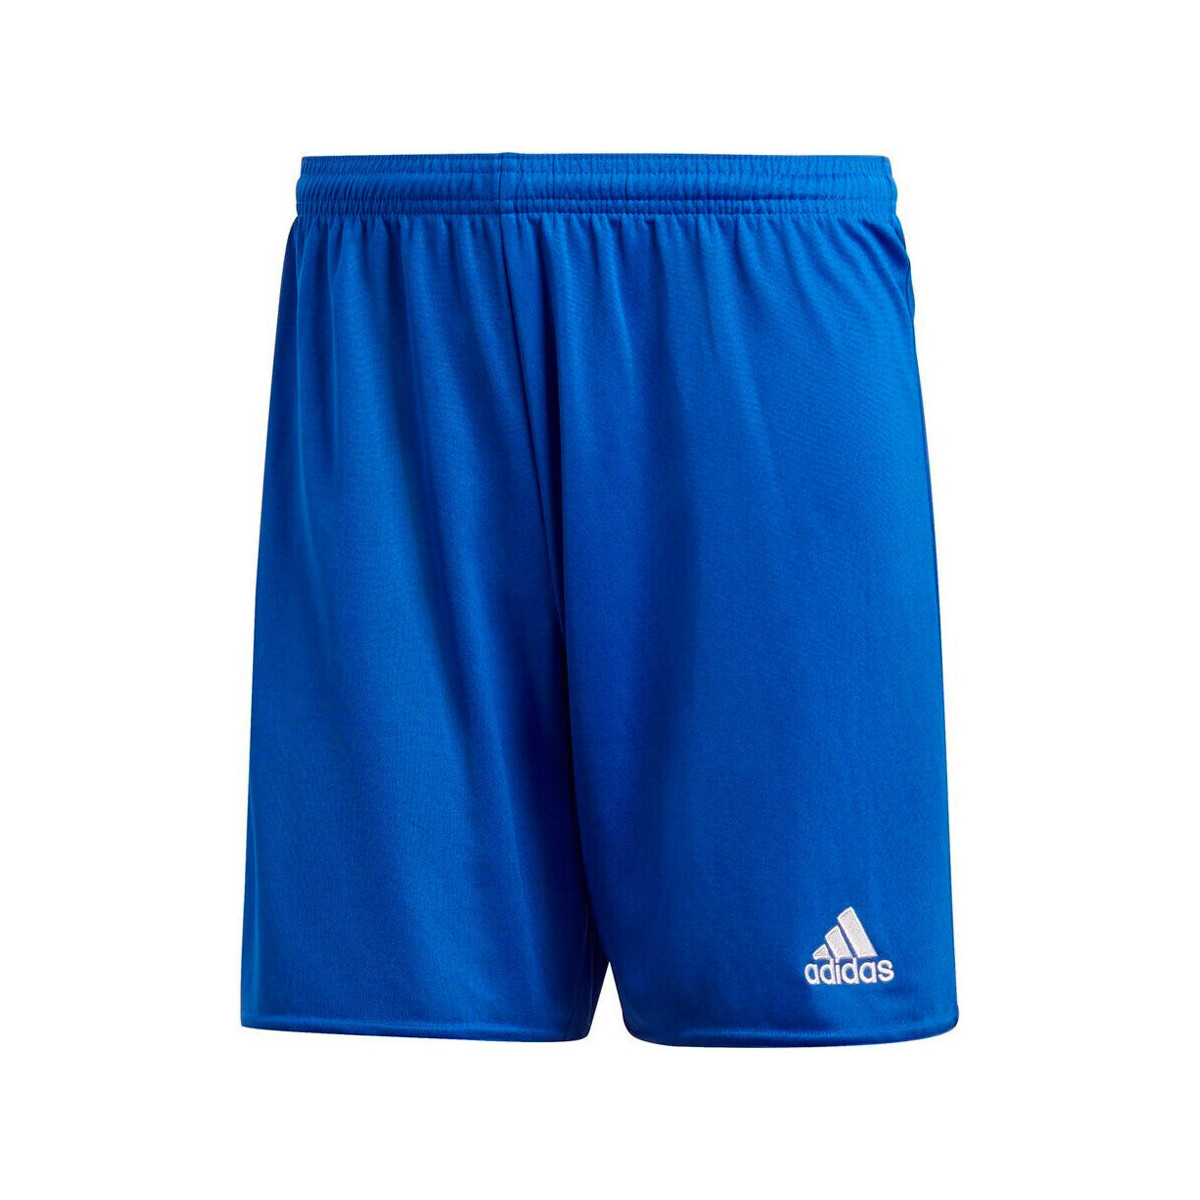 Vêtements Garçon Shorts / Bermudas adidas clearance Originals AJ5882-JR Bleu